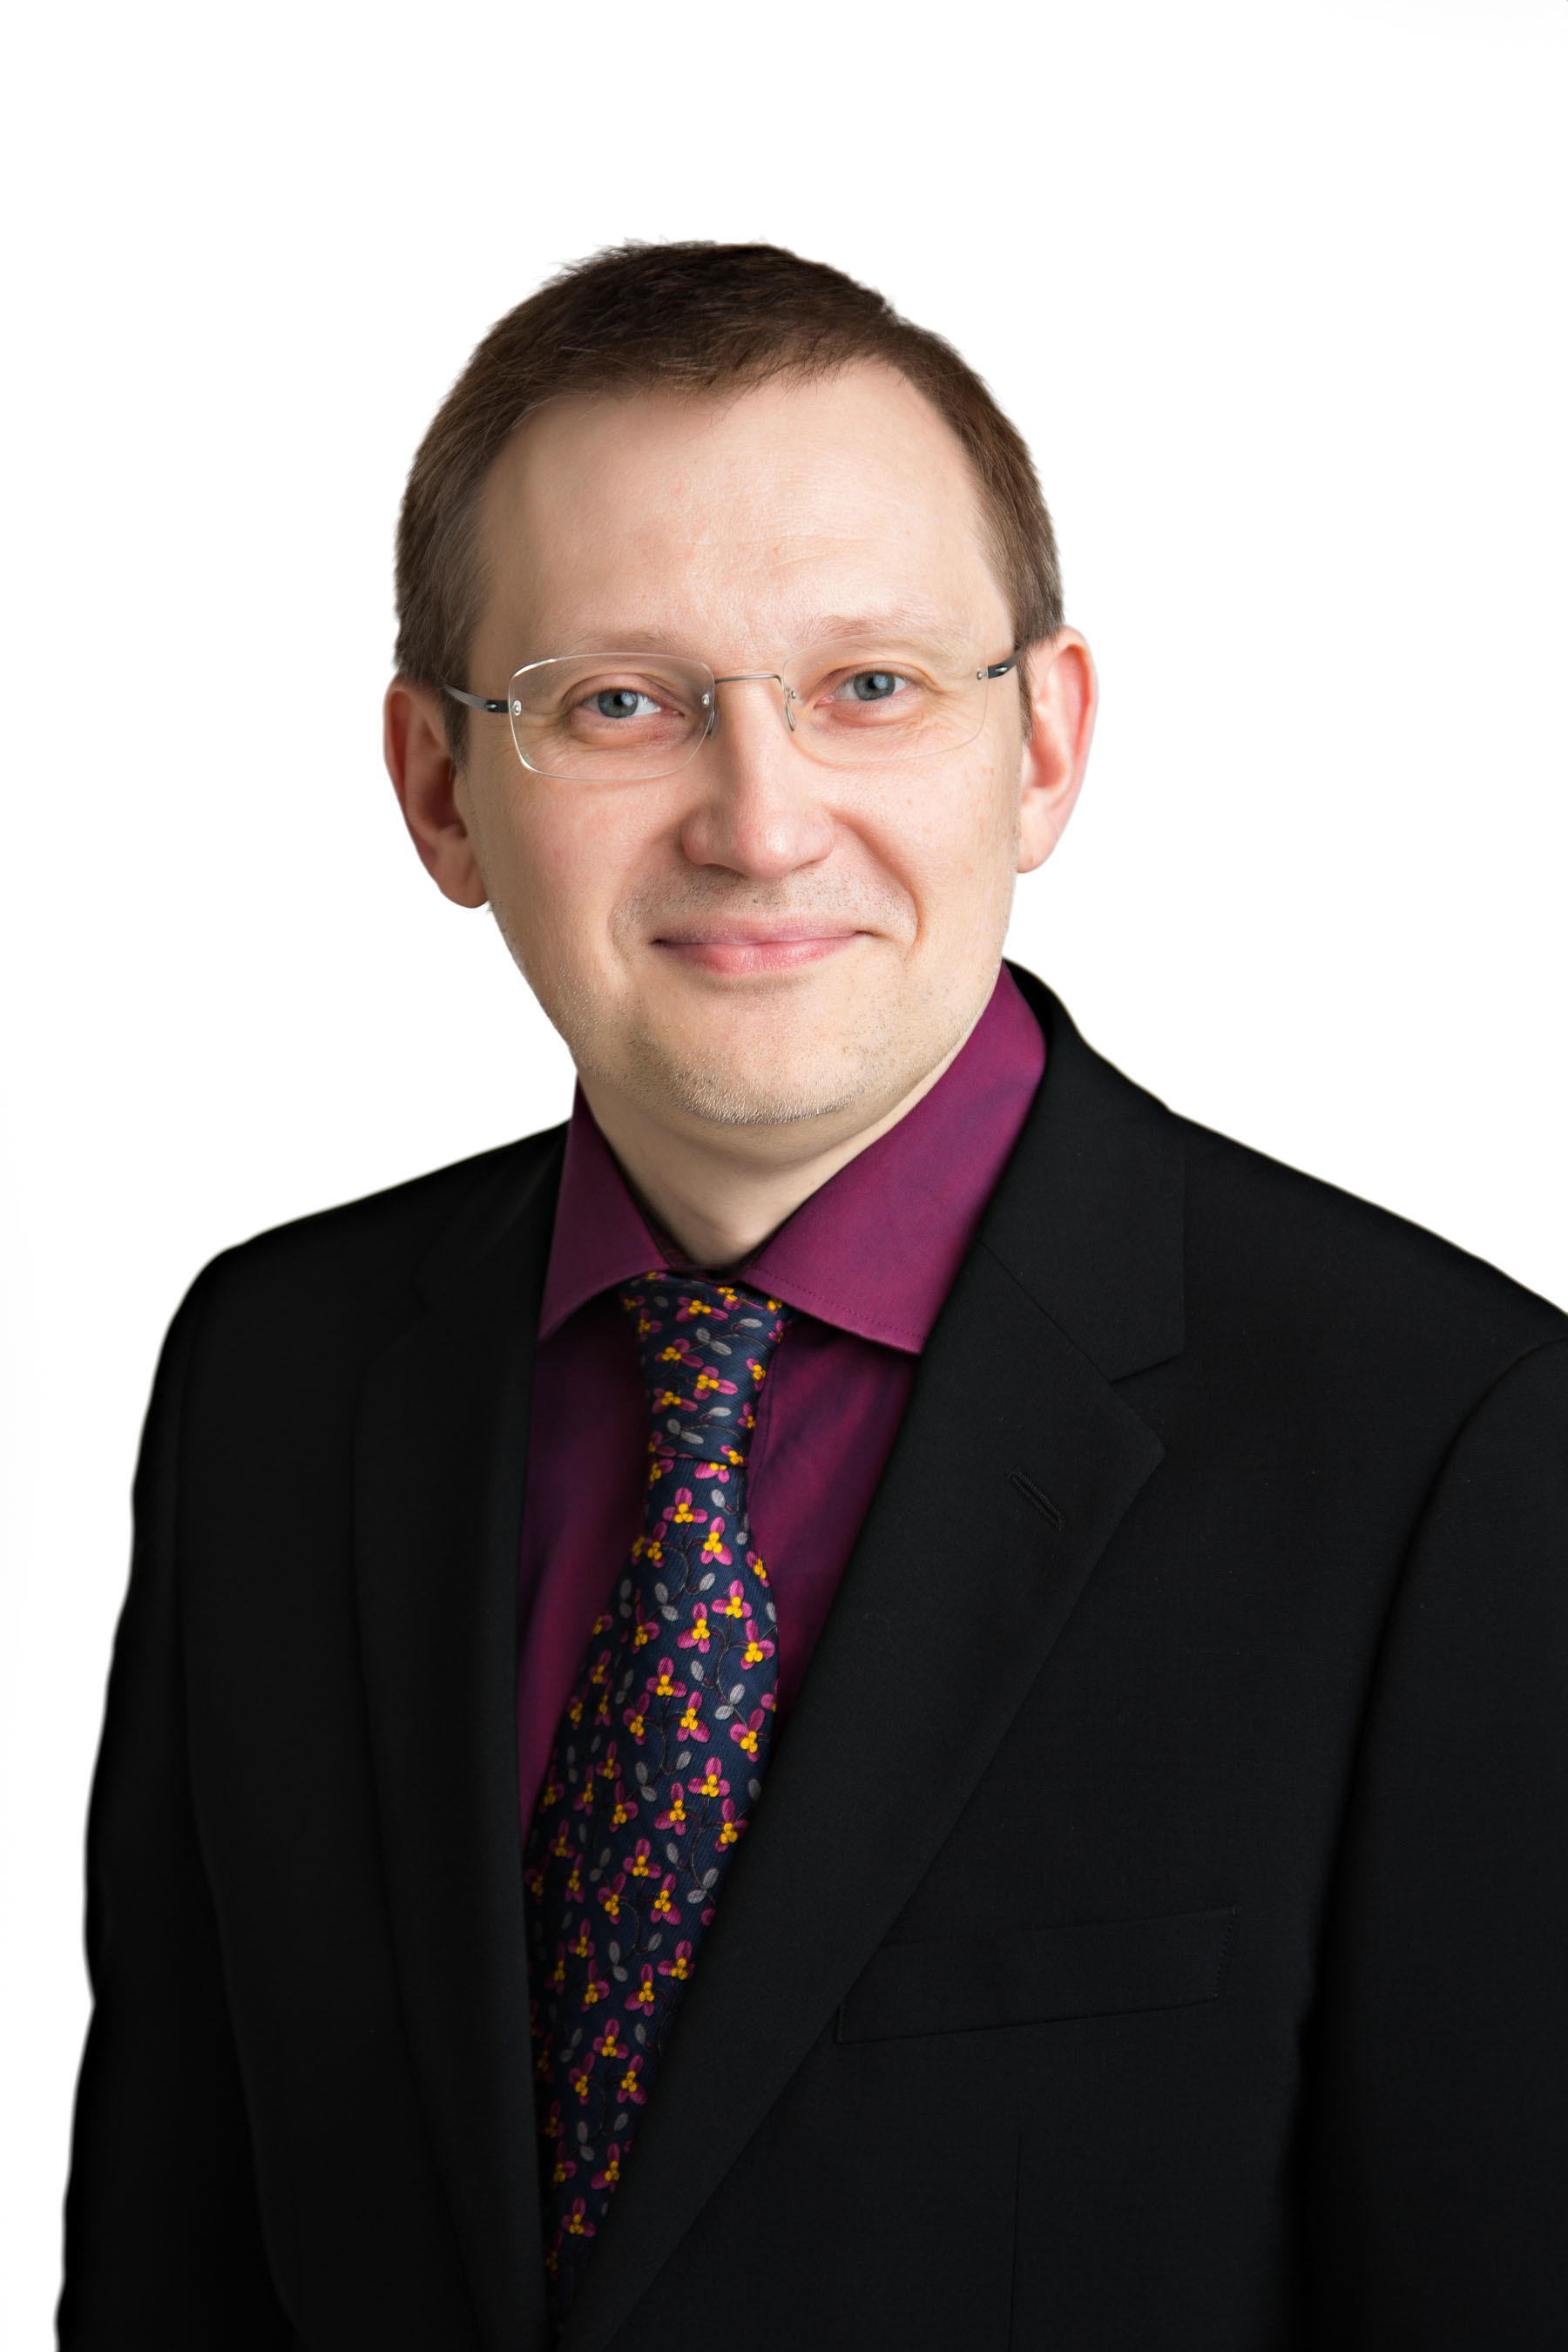 Dr. Vasily Isakov, Scientific Advisory Board Member at the Nutrilite Health Institute of Amway. (PRNewsFoto/Amway) (PRNewsFoto/AMWAY)